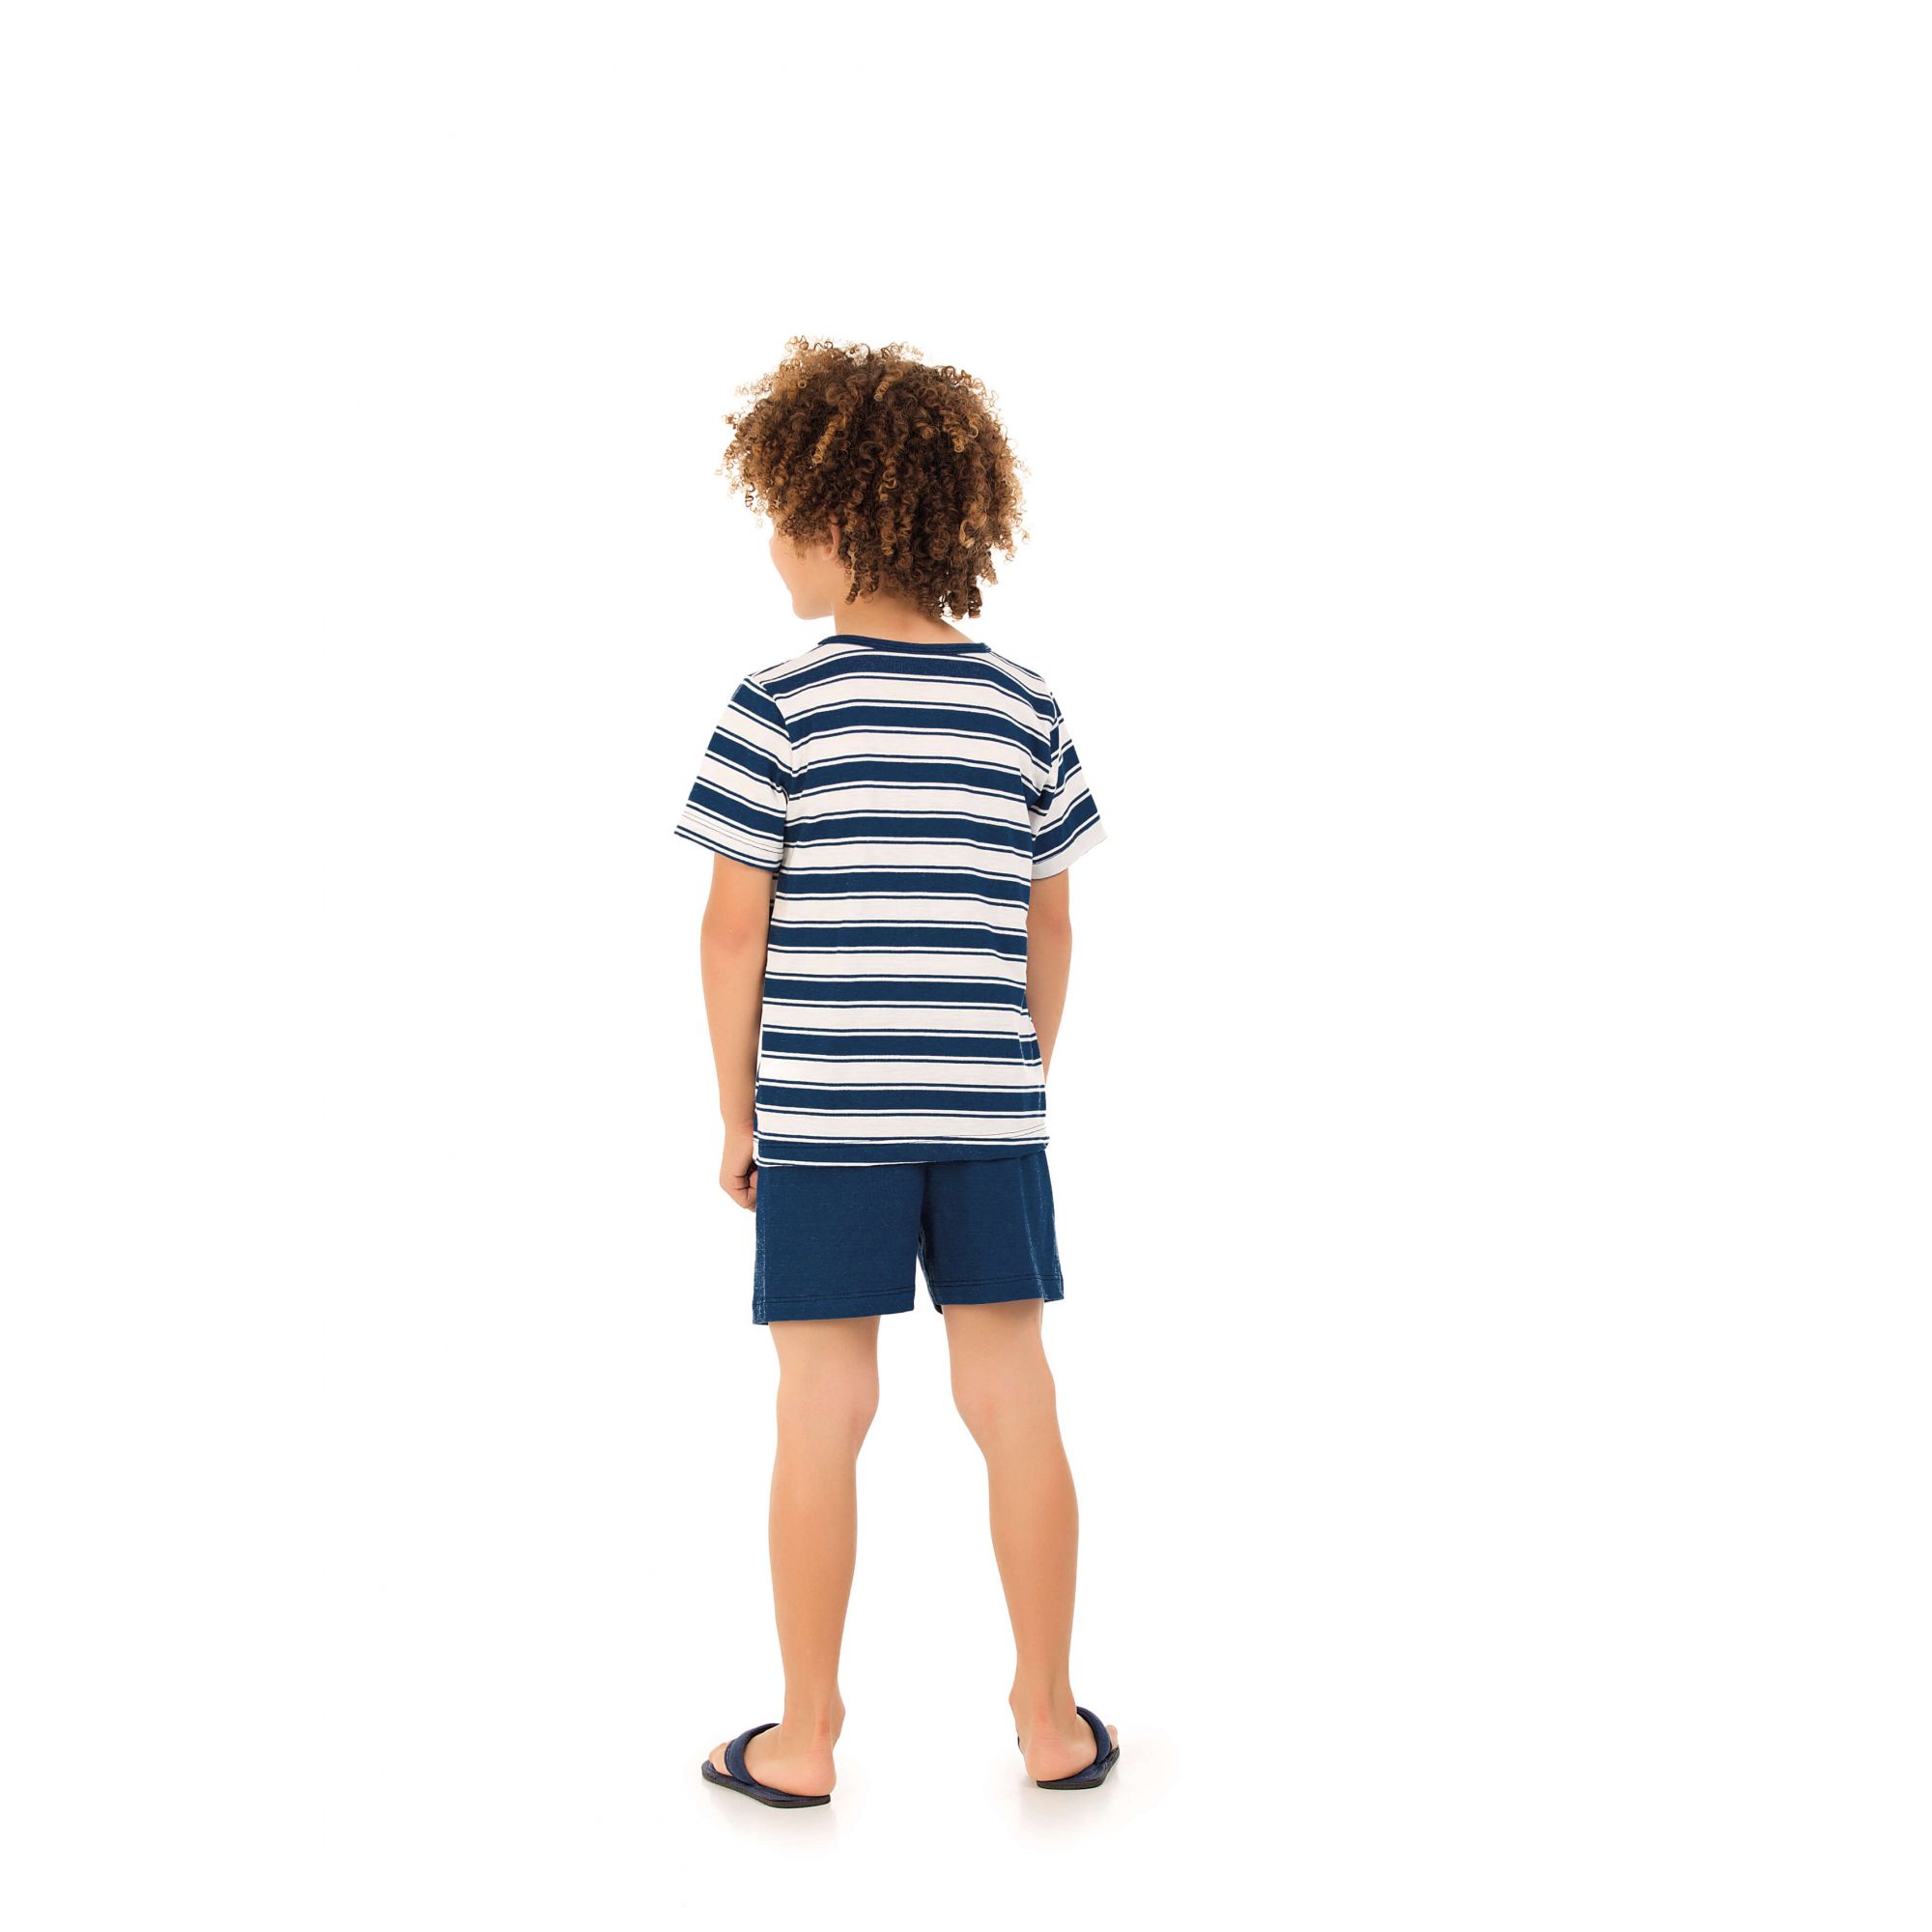 254/D - Pijama Infantil Masculino Curto Listrado